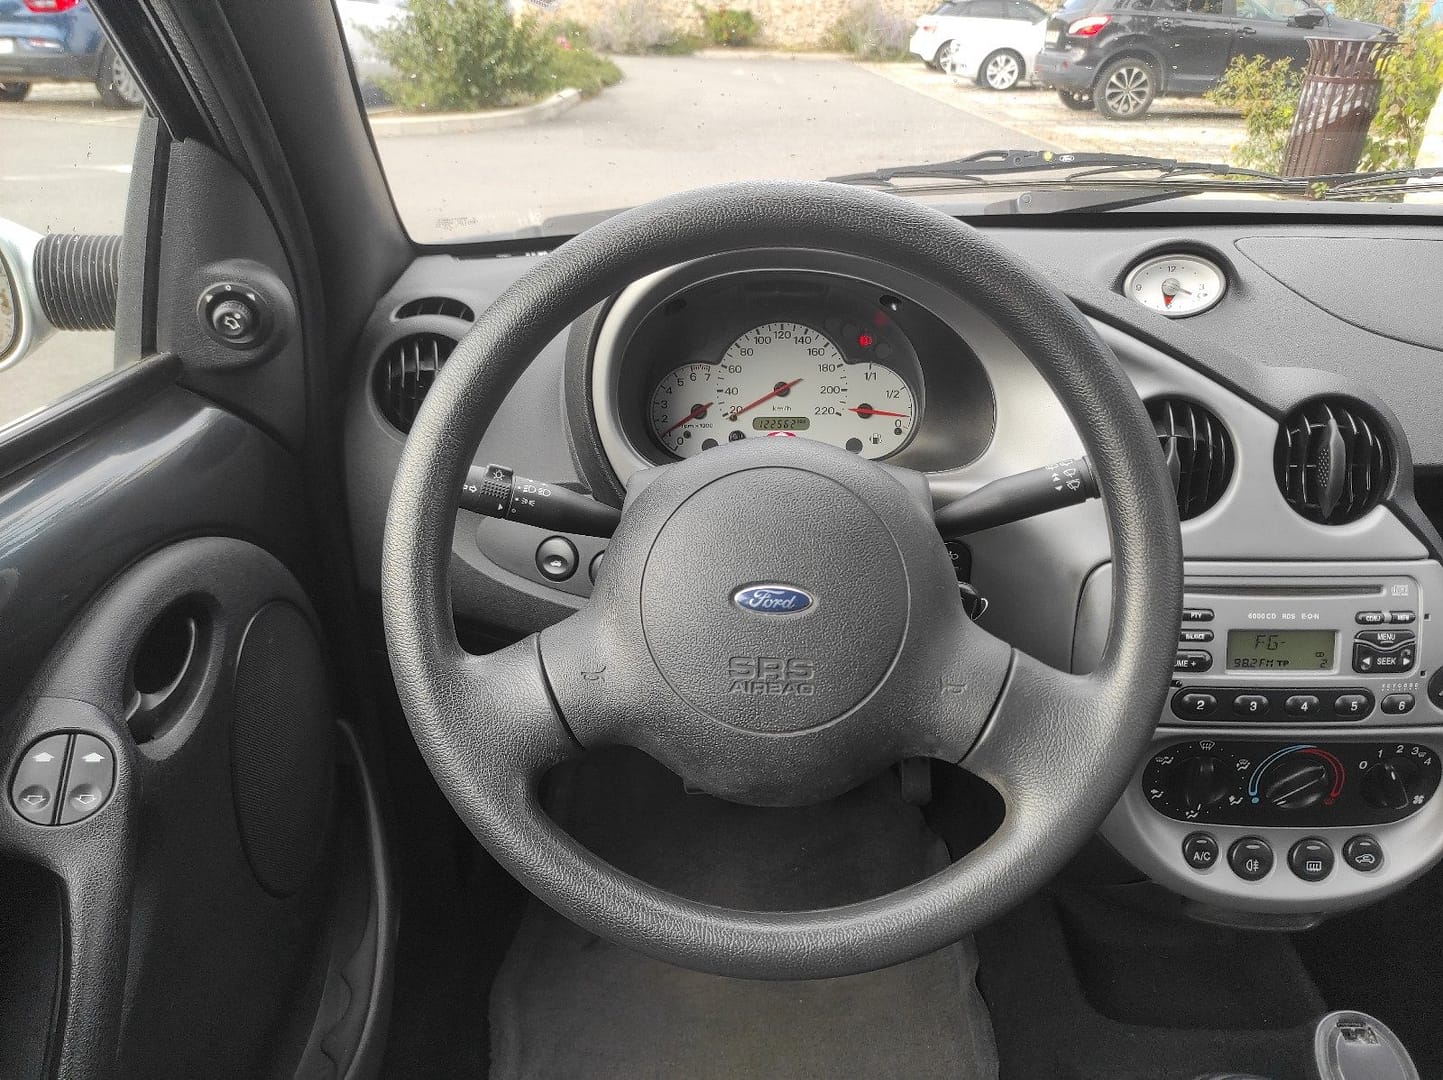 Ford Ka 1.3 70CH 3P - Automatix Motors - Voiture Occasion - Achat Voiture - Vente Voiture - Reprise Voiture